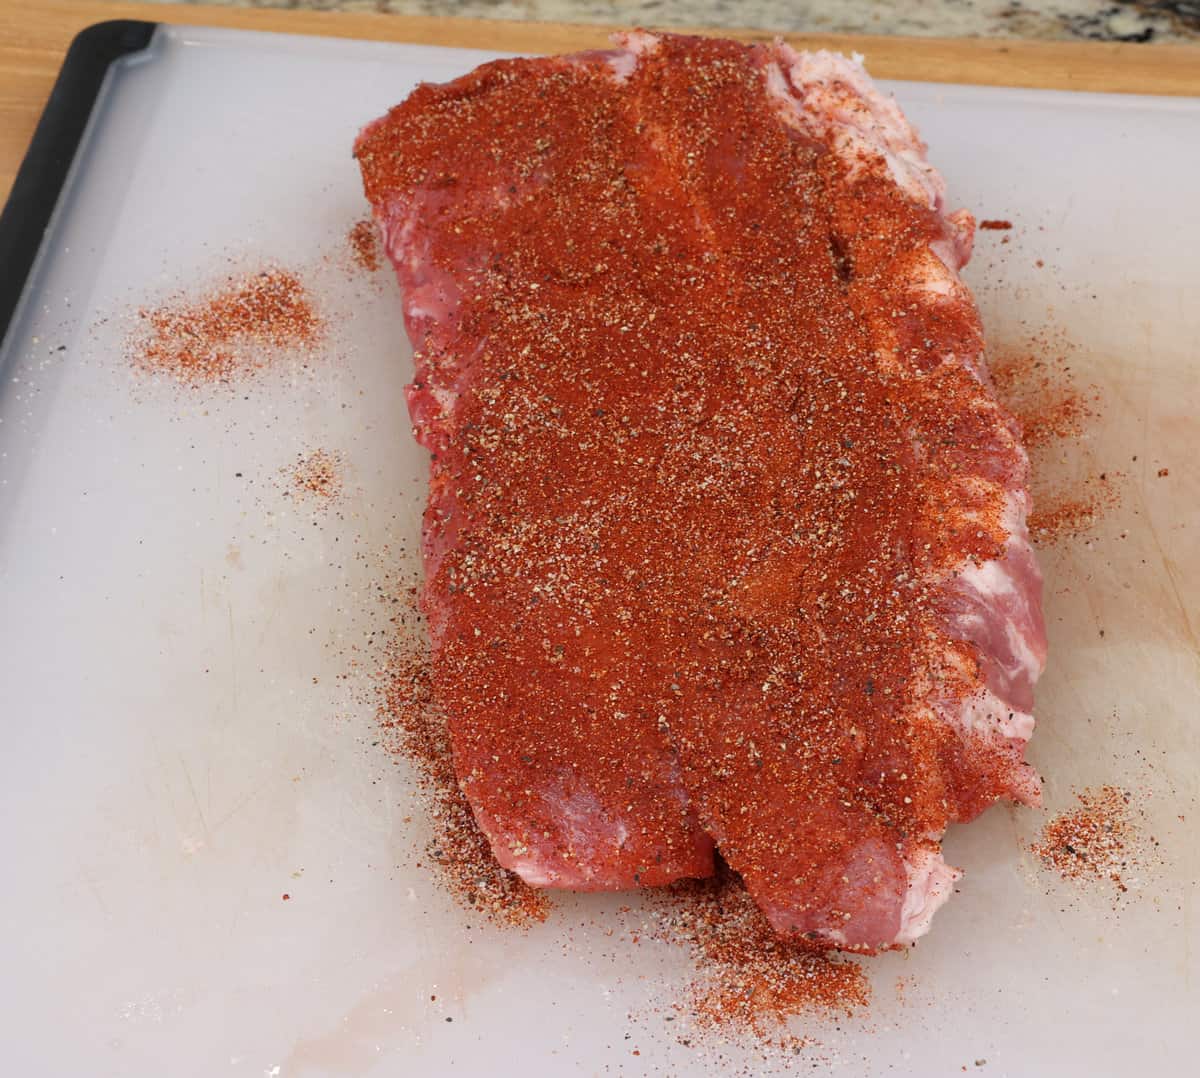 a half rack of ribs on a cutting board coated with dry rub seasoning.